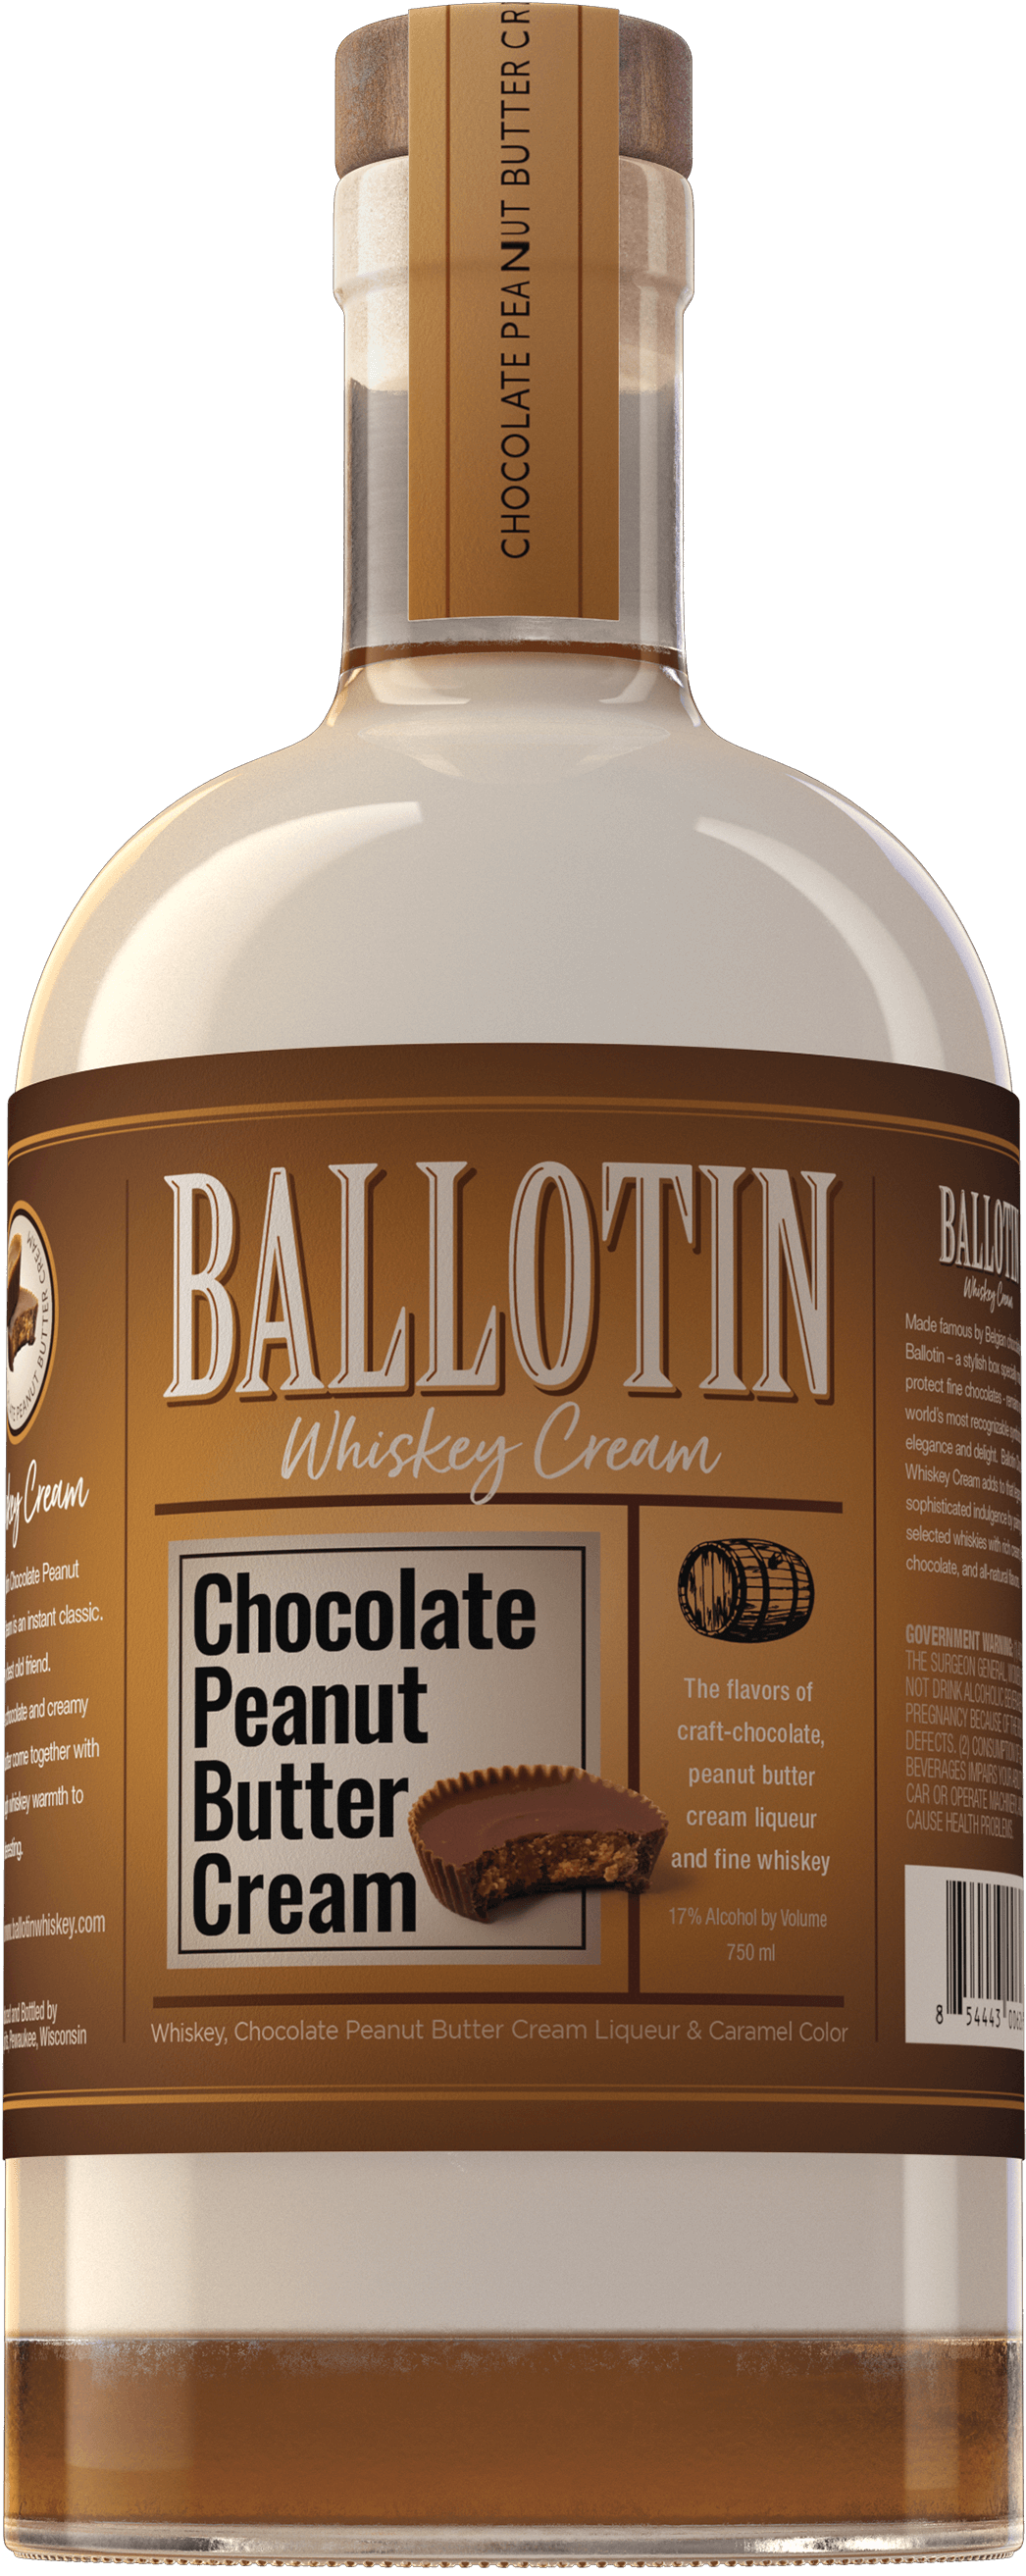 Ballotin Chocolate Peanut Butter Whiskey Cream